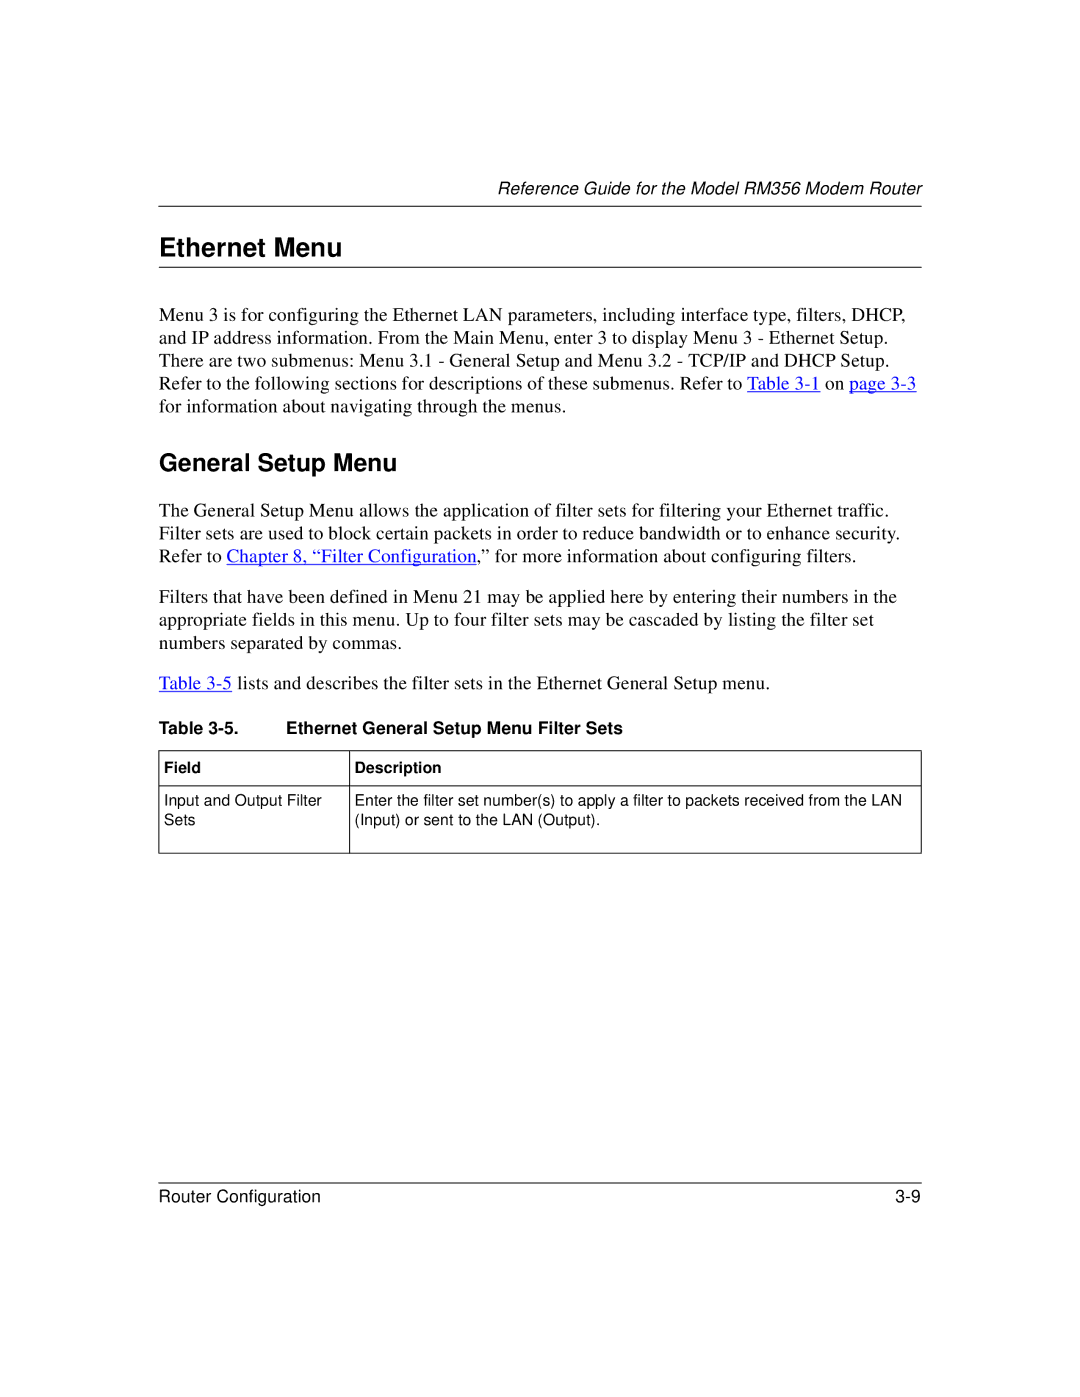 Bay Technical Associates RM356 manual Ethernet Menu, Ethernet General Setup Menu Filter Sets, Field Description 